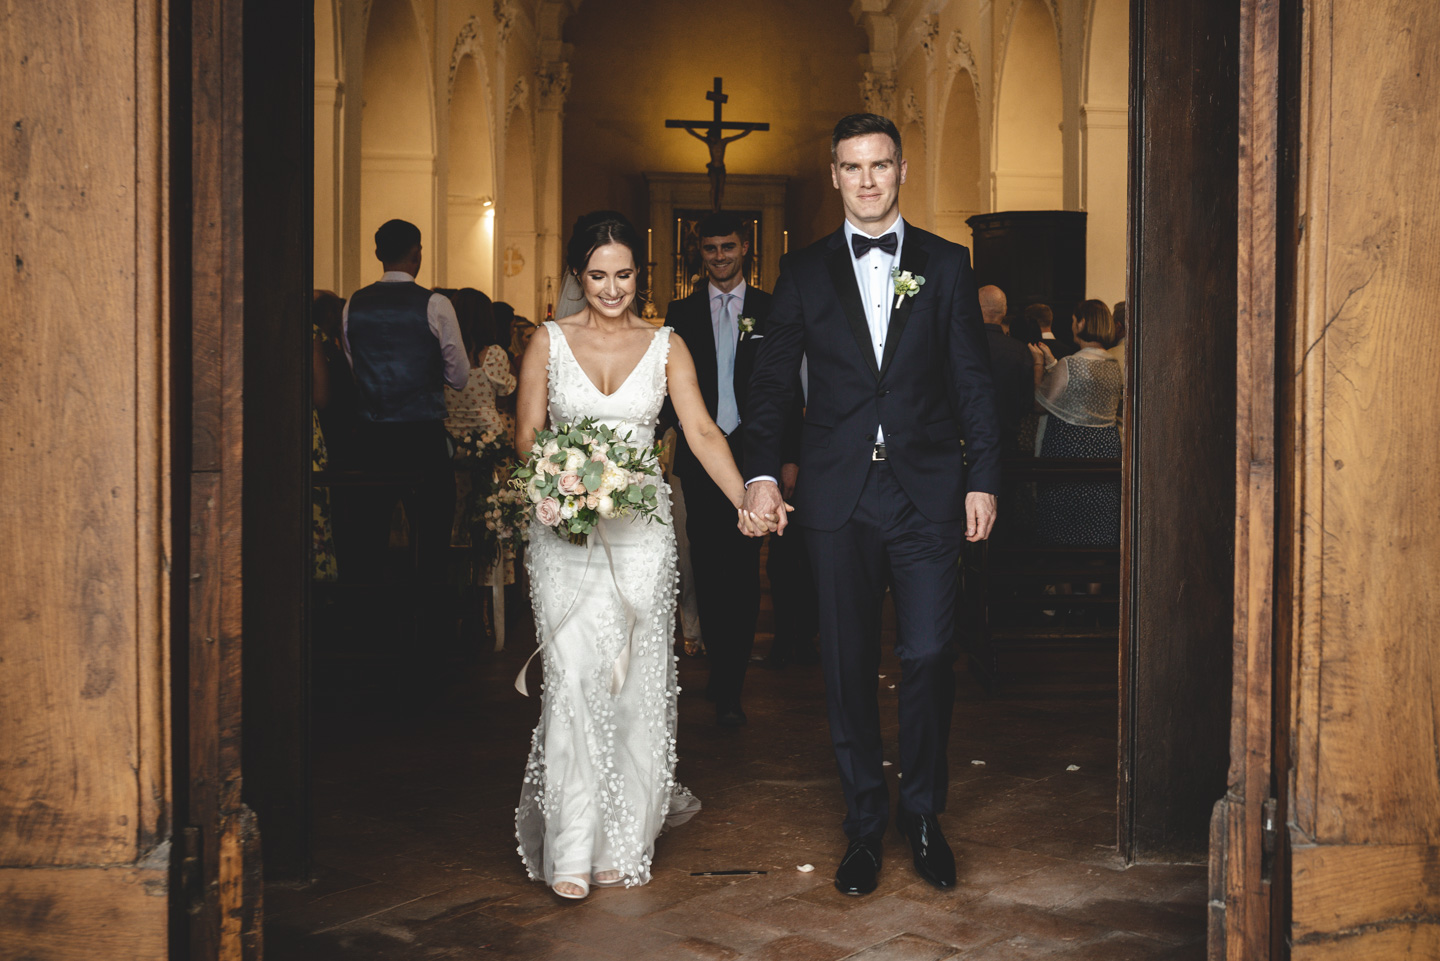 Wedding Ceremony at Castello Il Palagio Marco Vegni Photographer